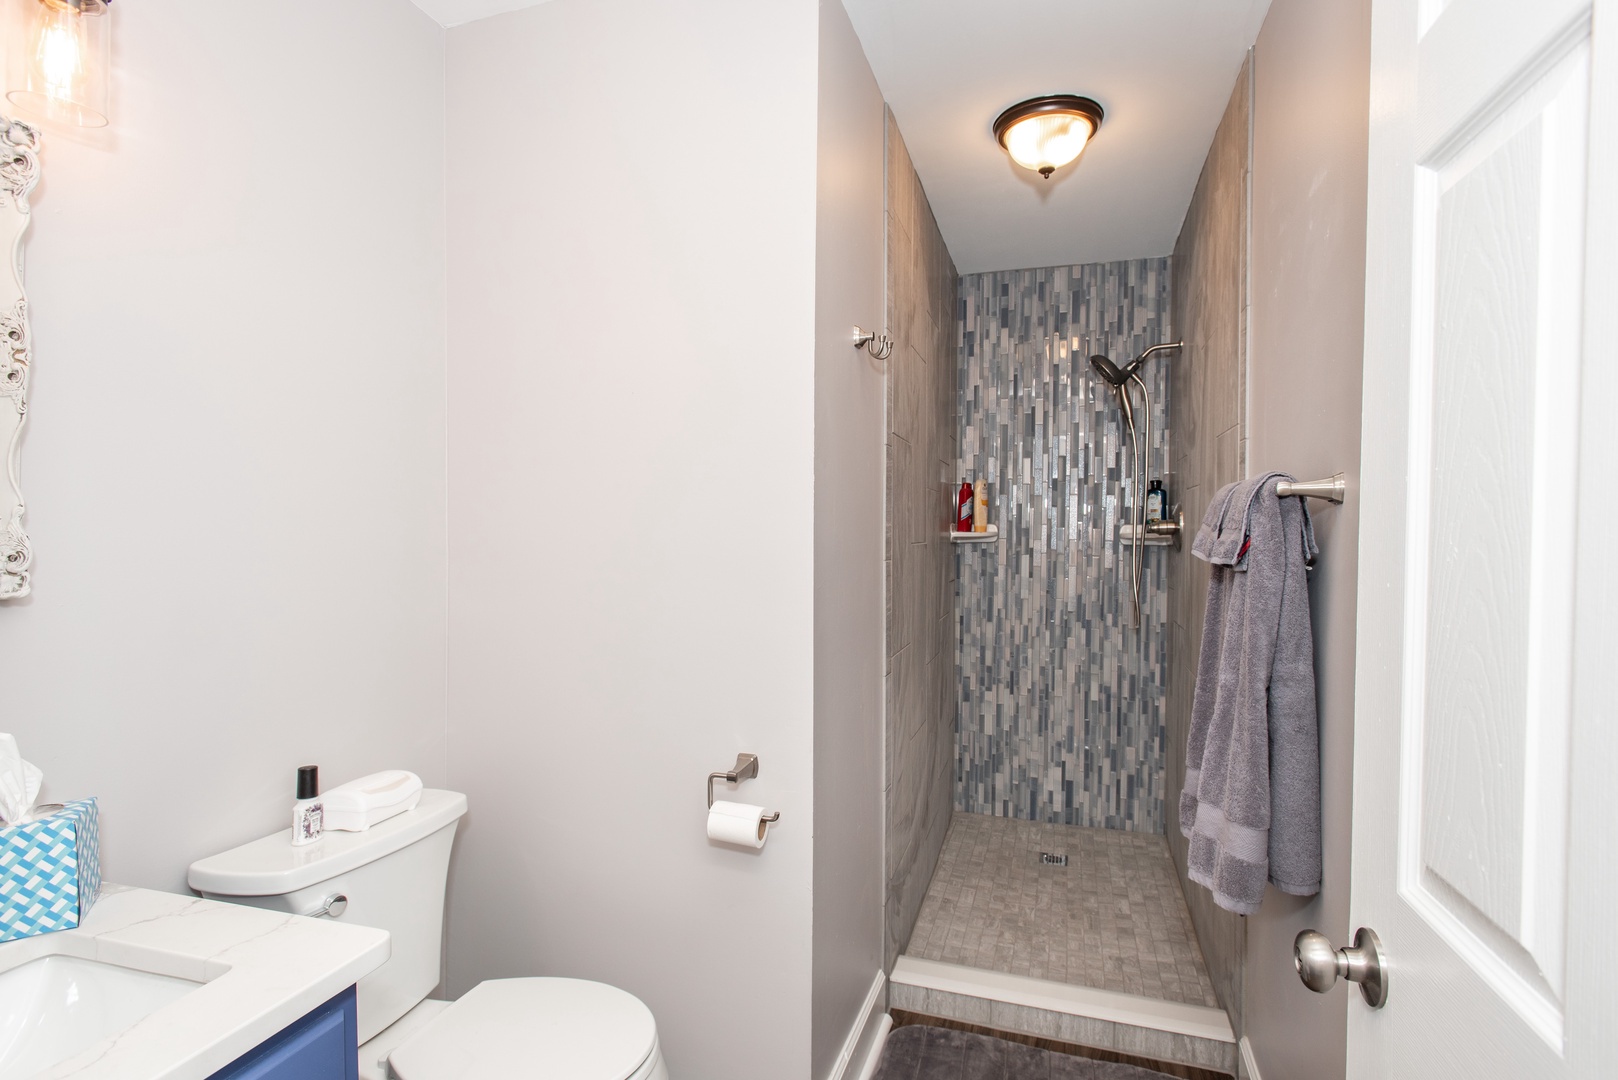 Apt 1 – The full bathroom includes a single vanity & walk-in shower